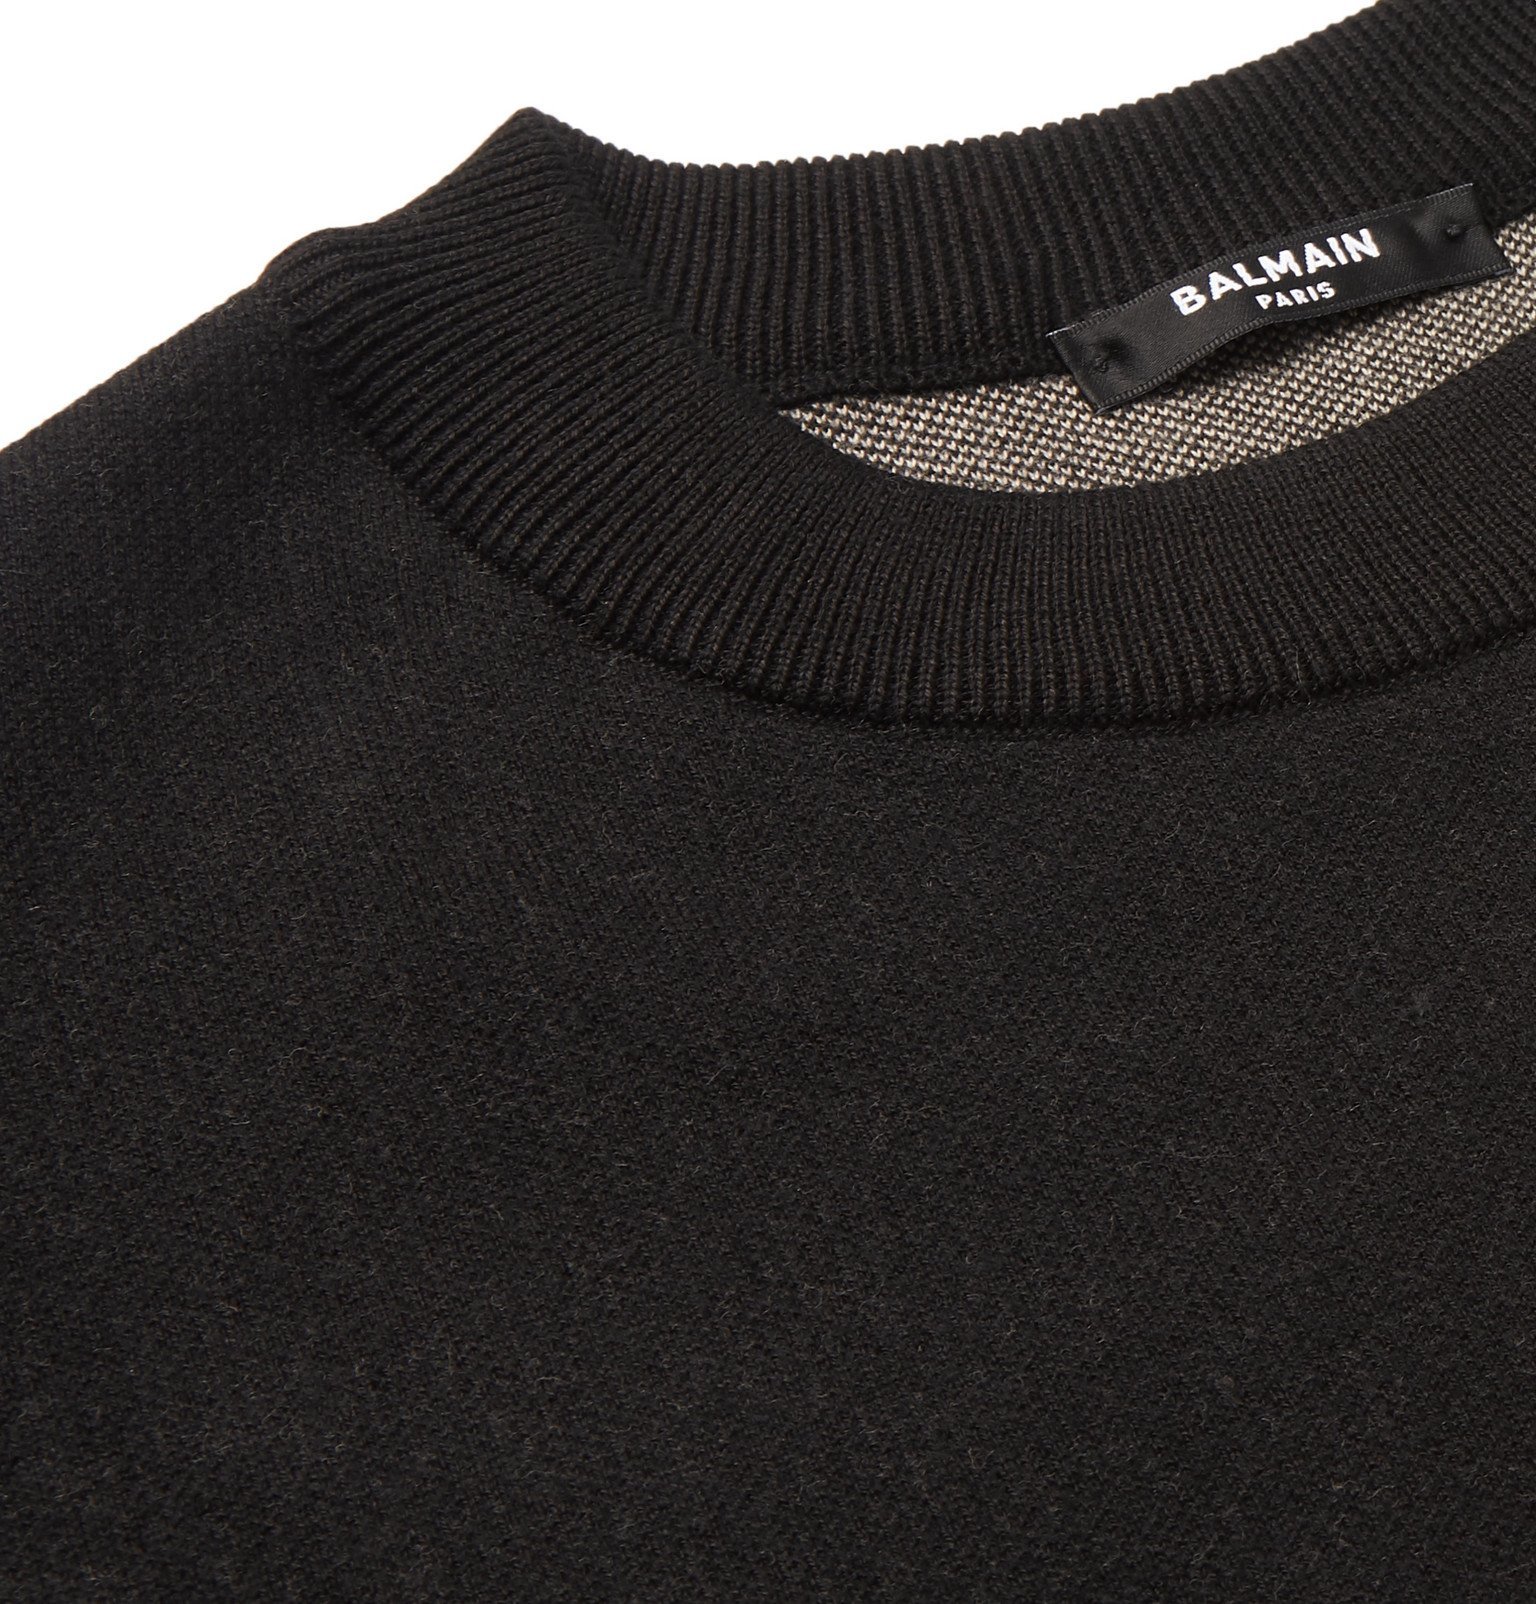 Balmain - Logo-Jacquard Cotton Sweater - Black Balmain